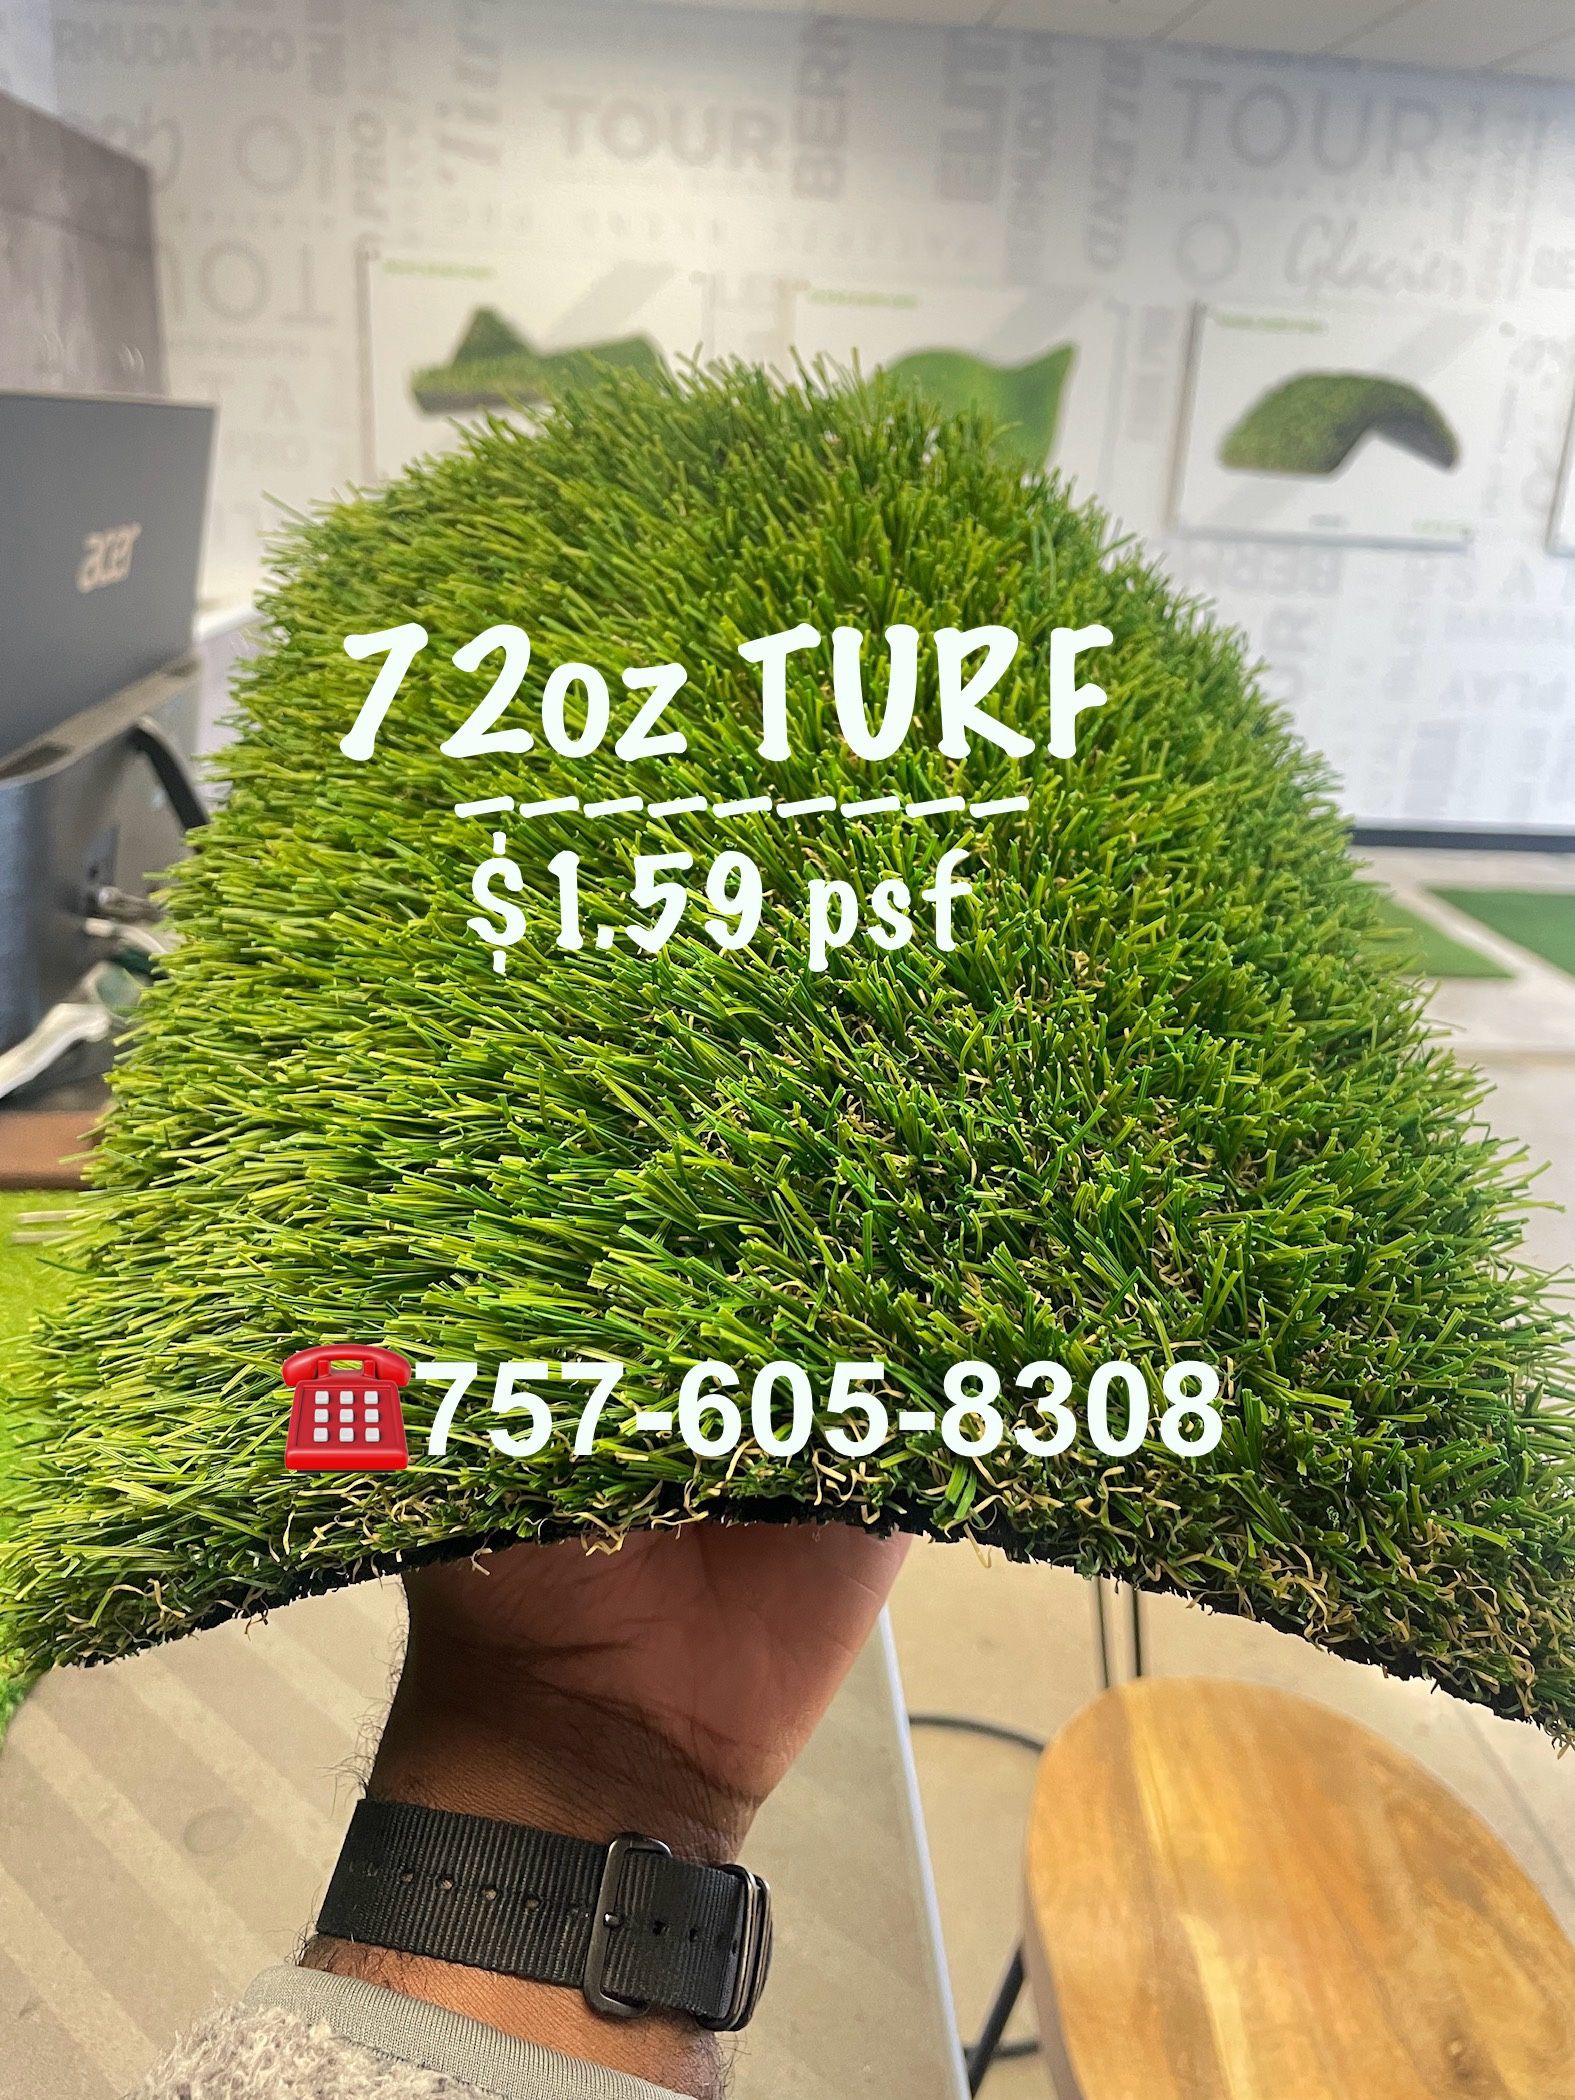 Synthetic Turf Grass Bermuda 72oz